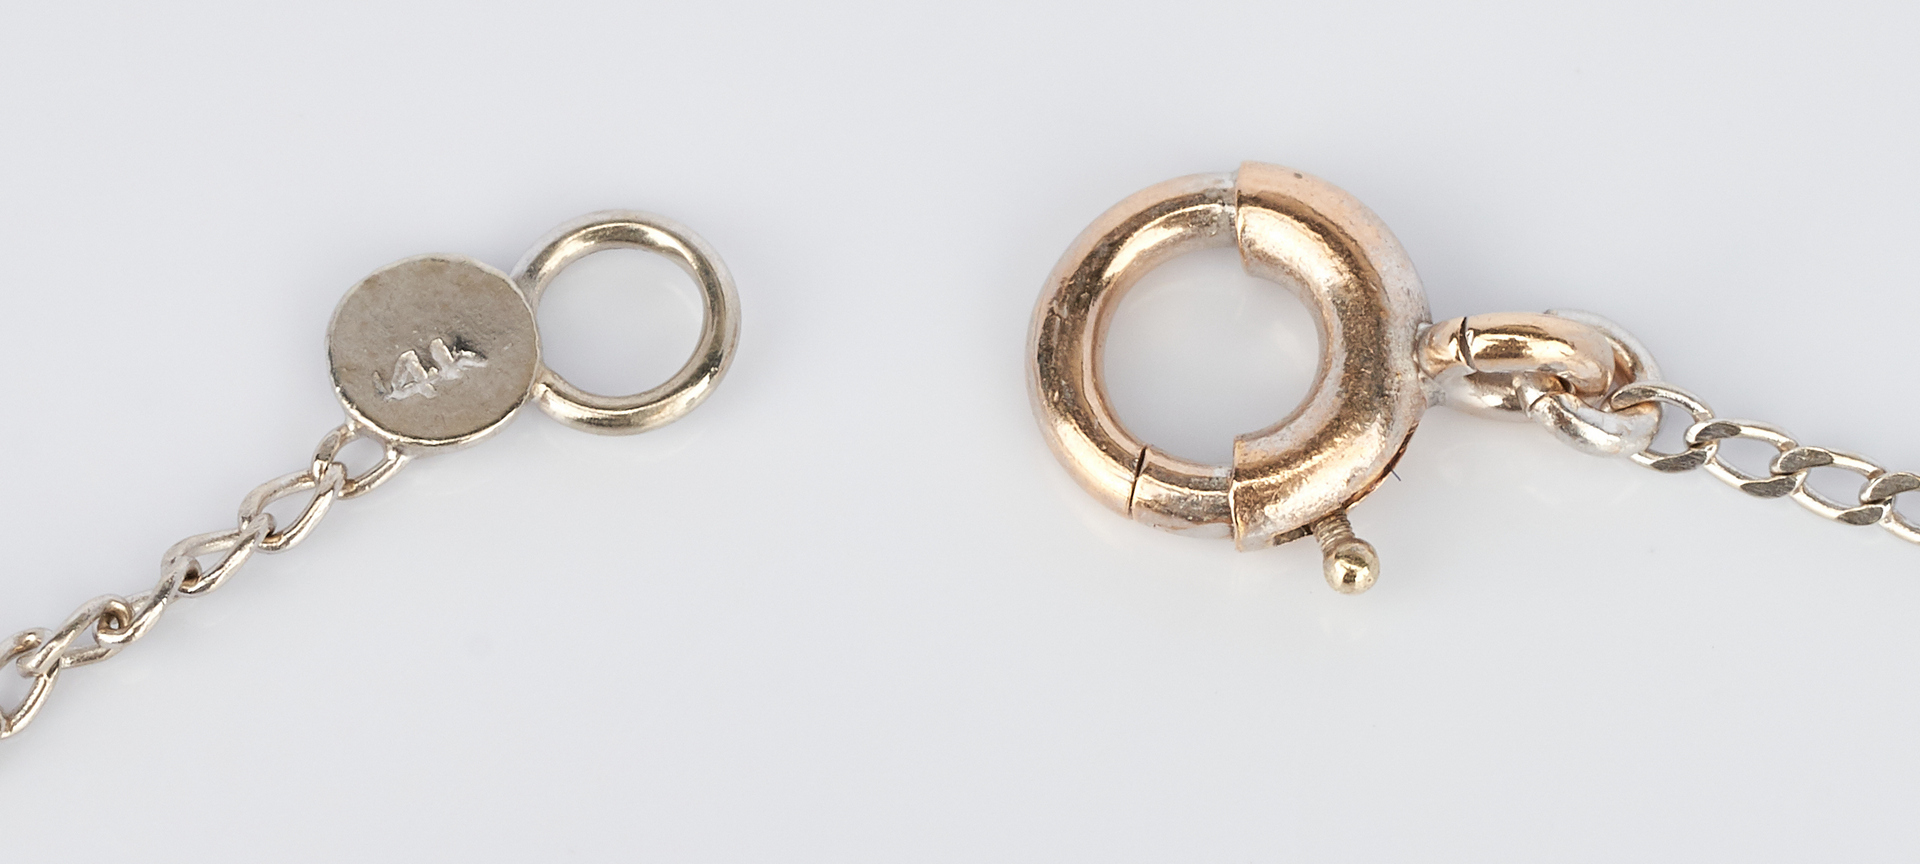 Lot 935: 4 Jewelry Items: 2 Rings & 2 Cross Pendants